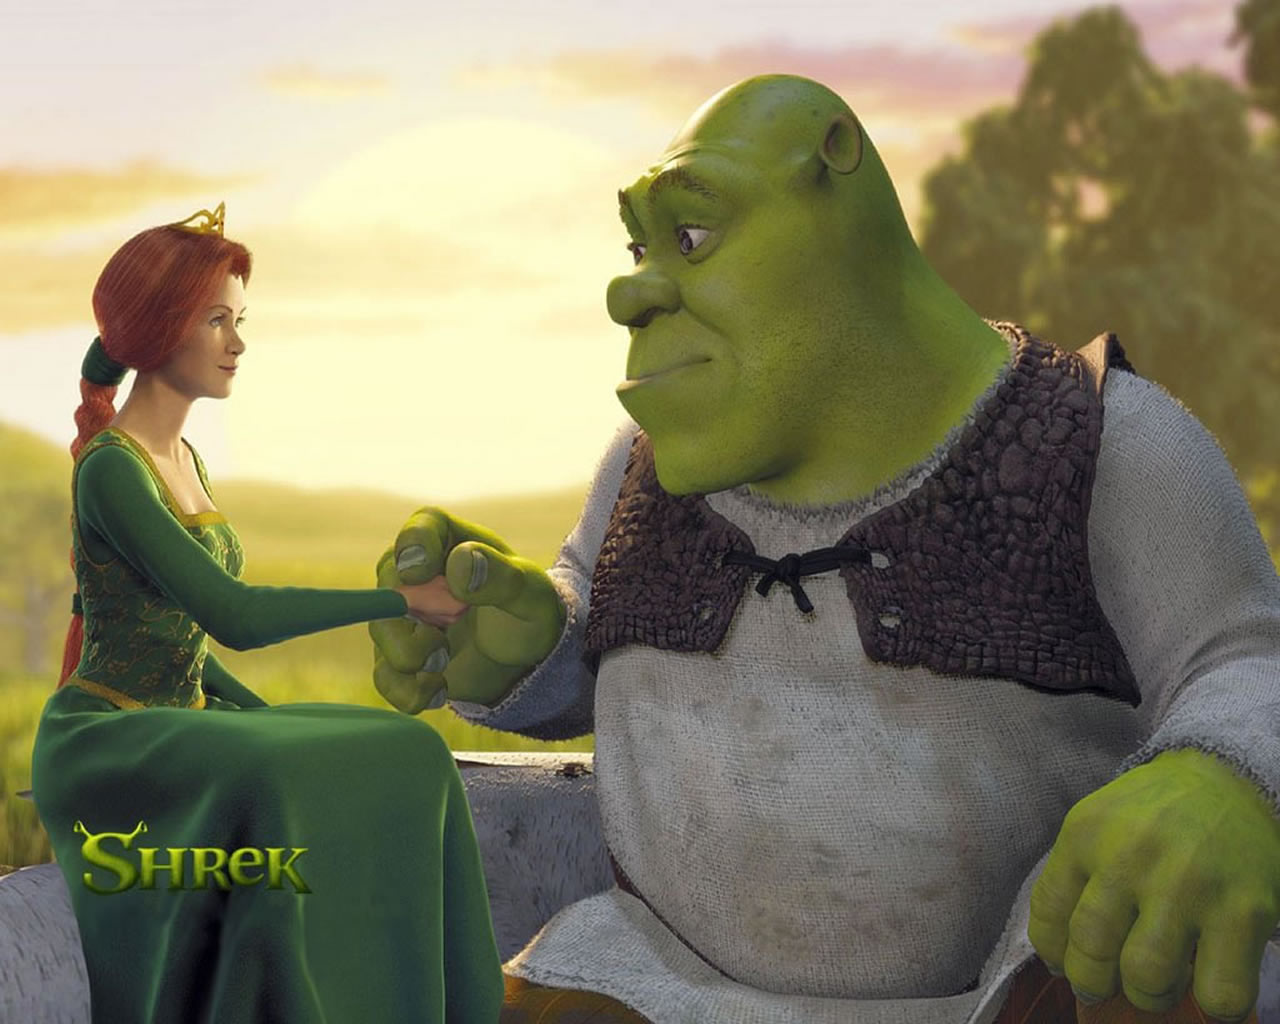 download wallpaper: Shrek en prinses Fiona wallpaper